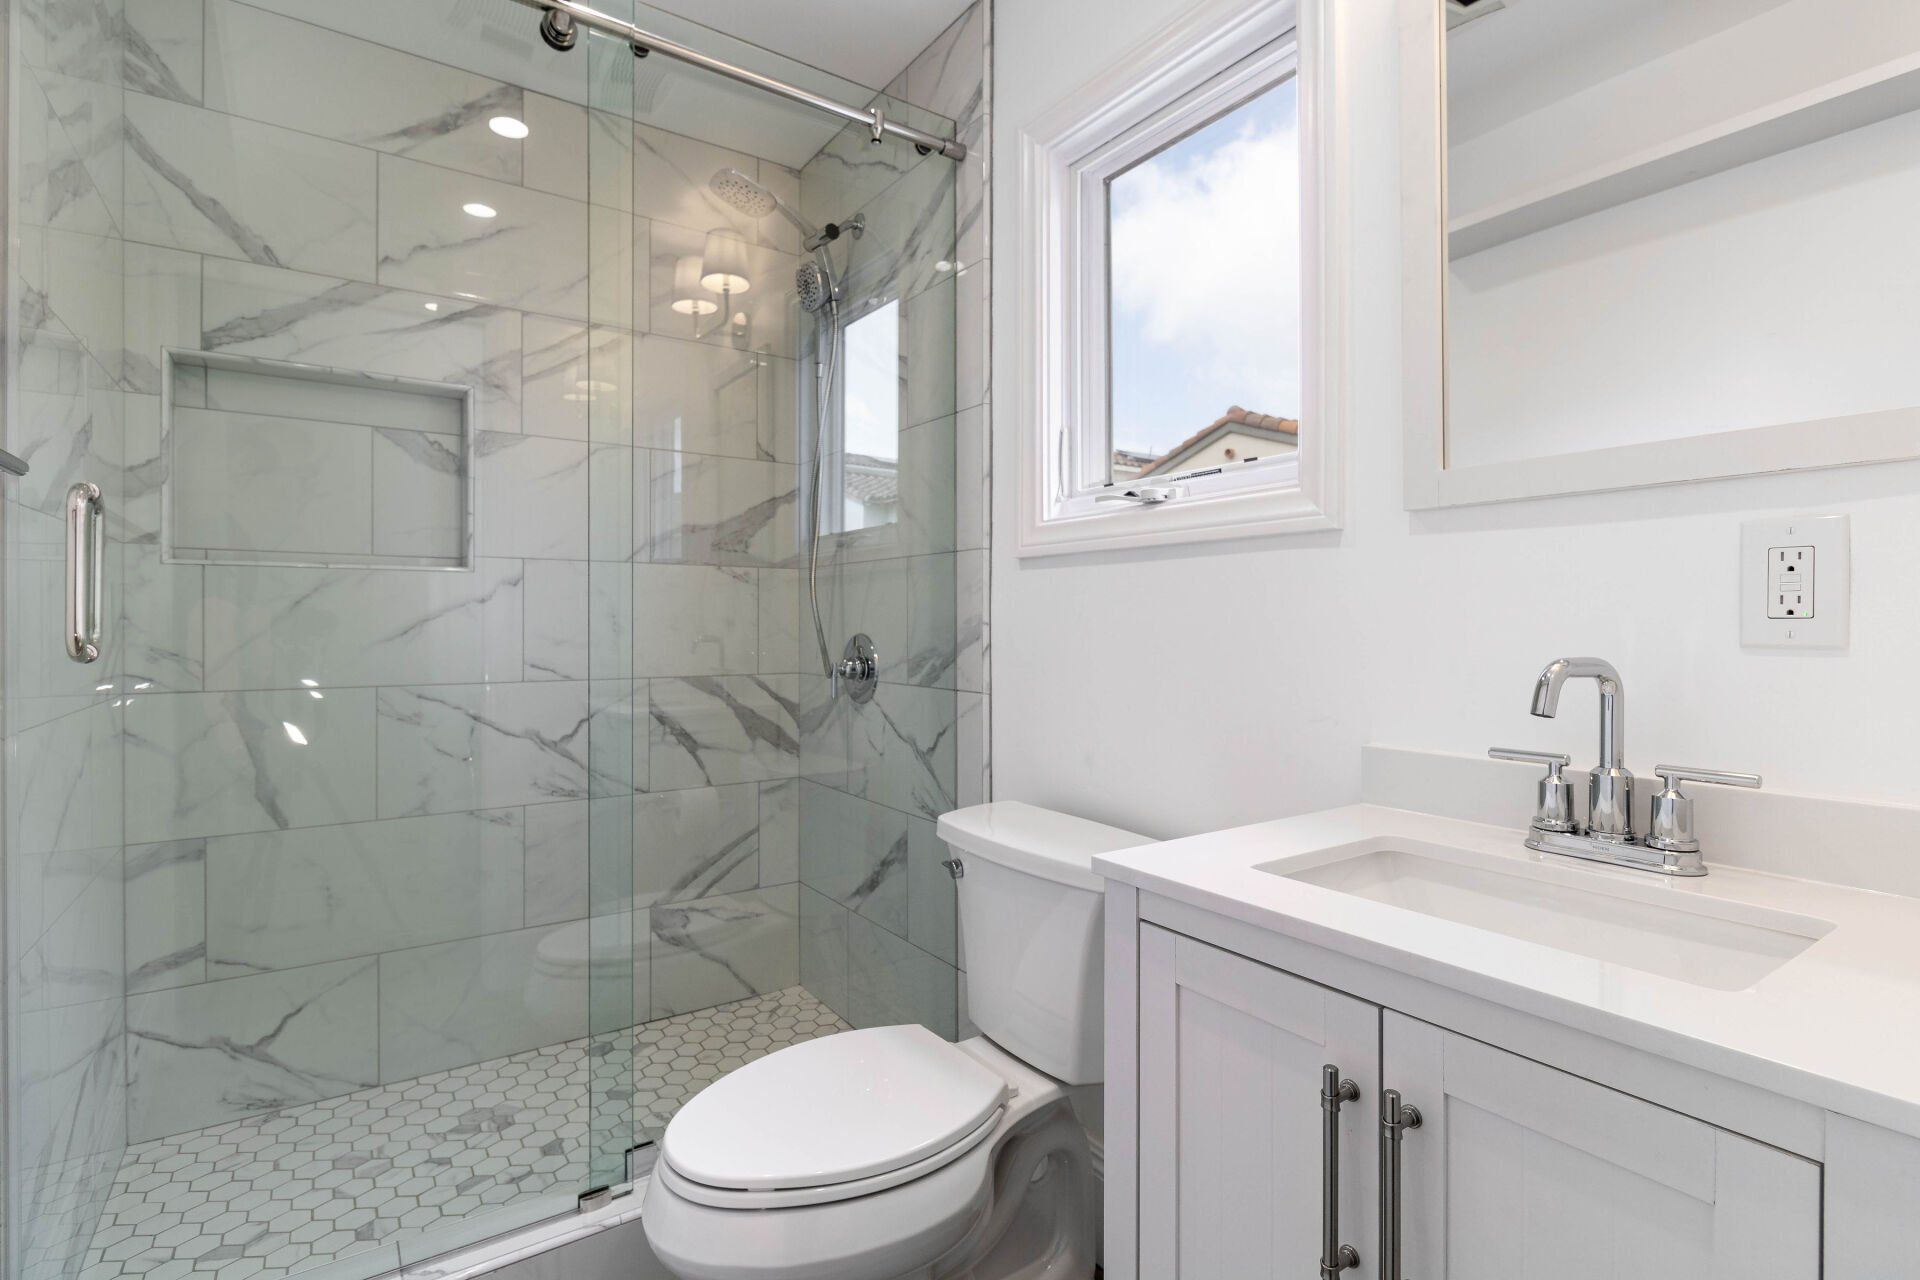 Image of bathroom renovated by Gary Faith Construction